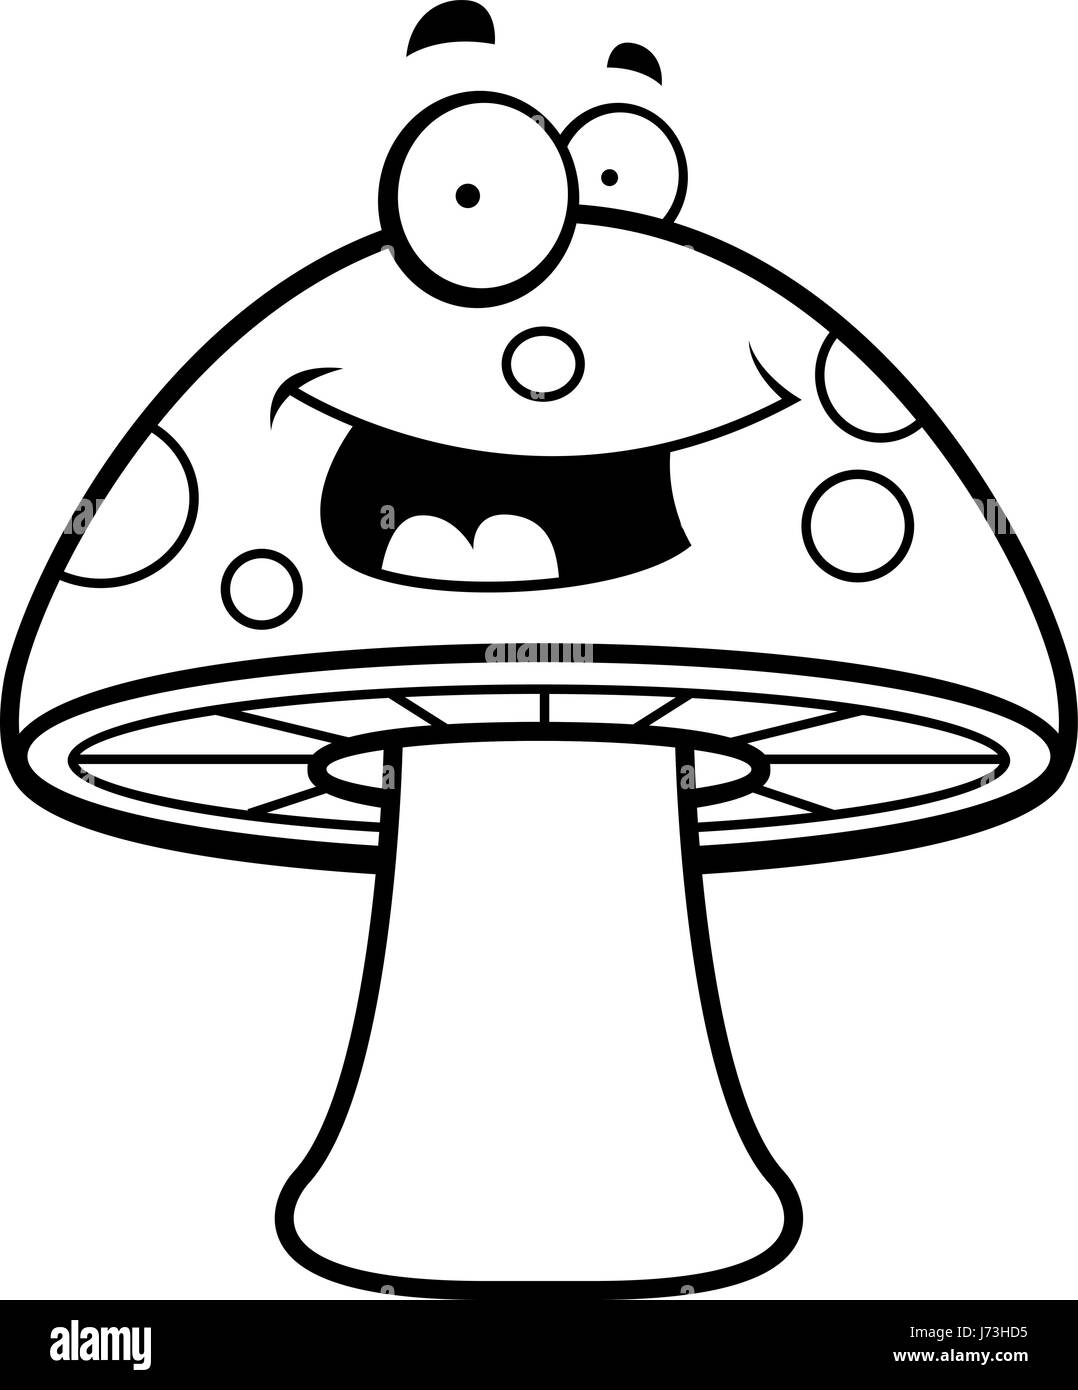 A cartoon magic mushroom happy and smiling. Stock Vector